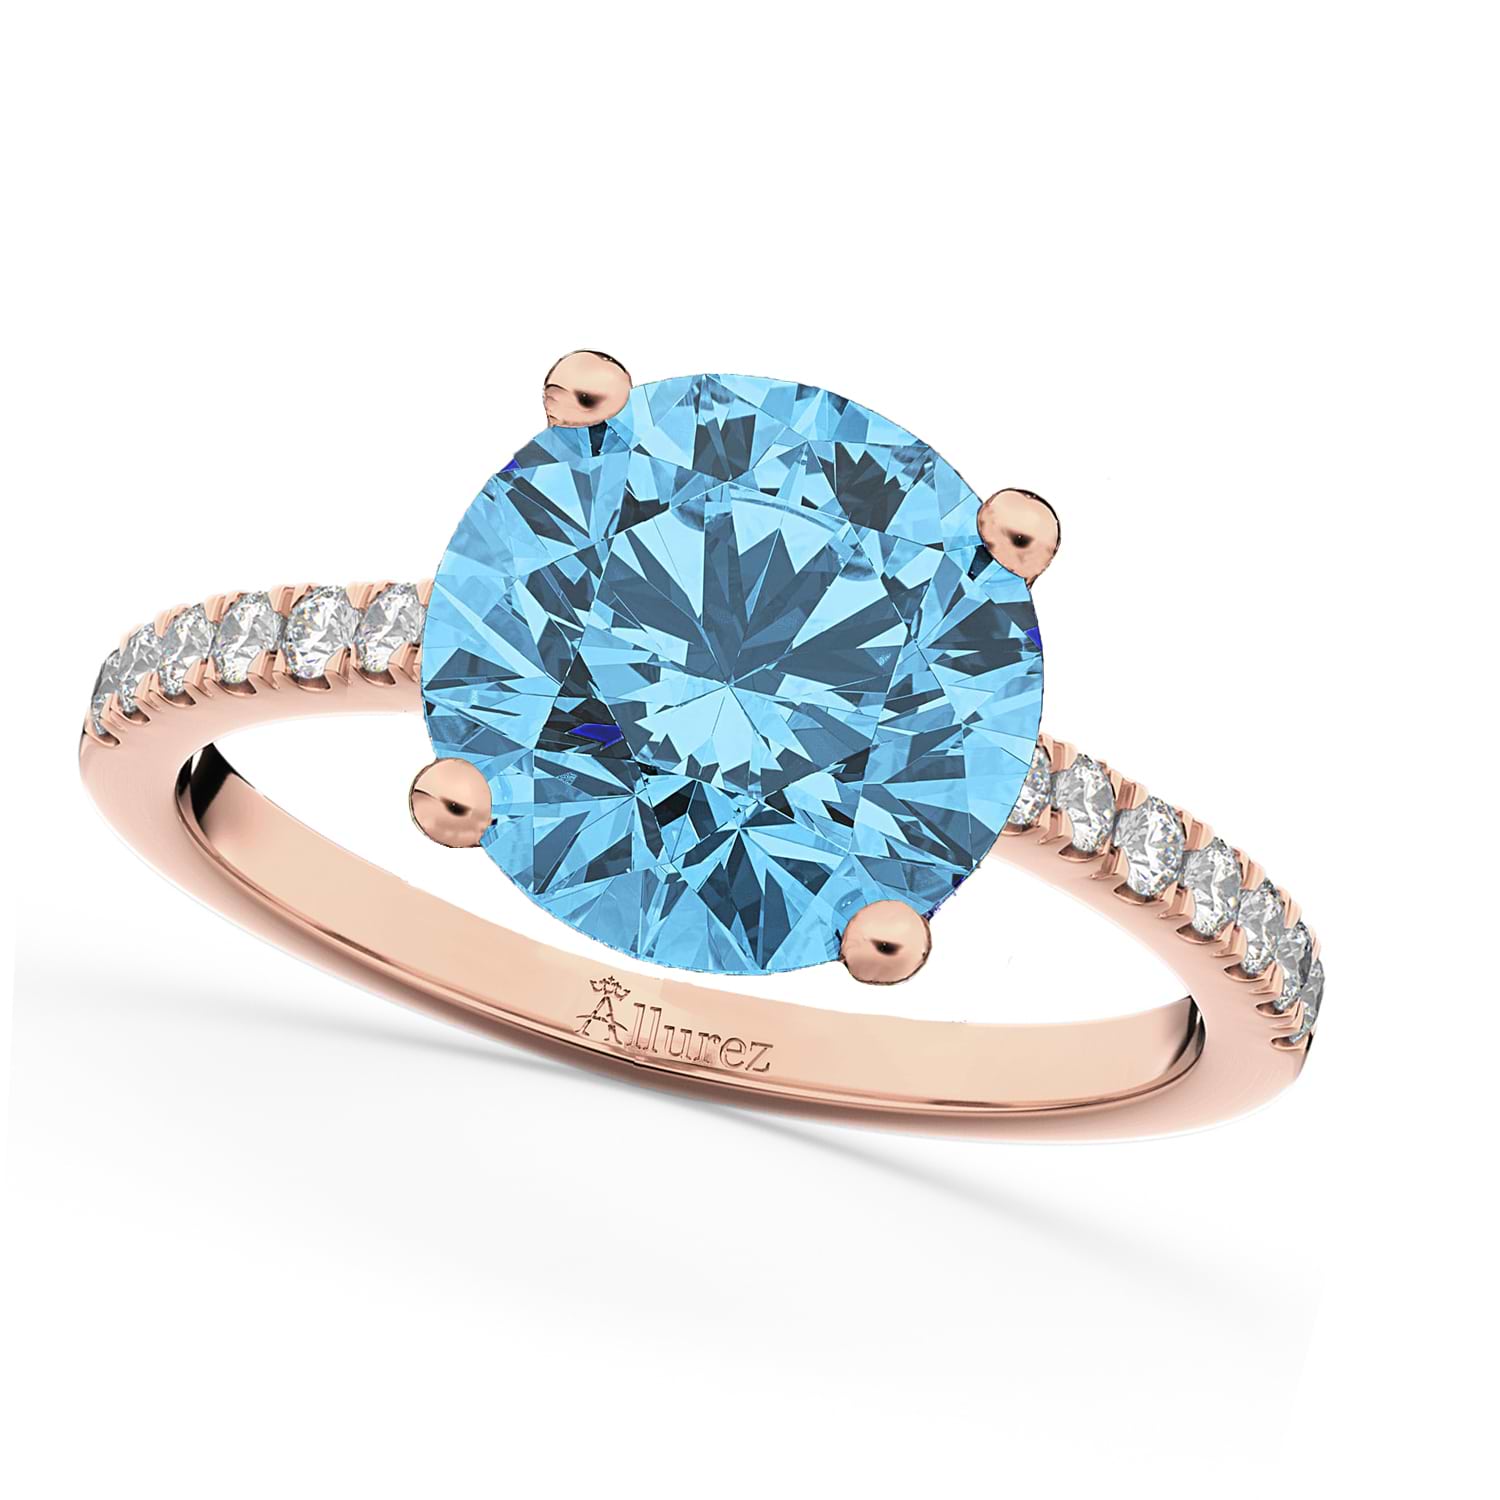 Blue Topaz & Diamond Engagement Ring 18K Rose Gold 2.71ct